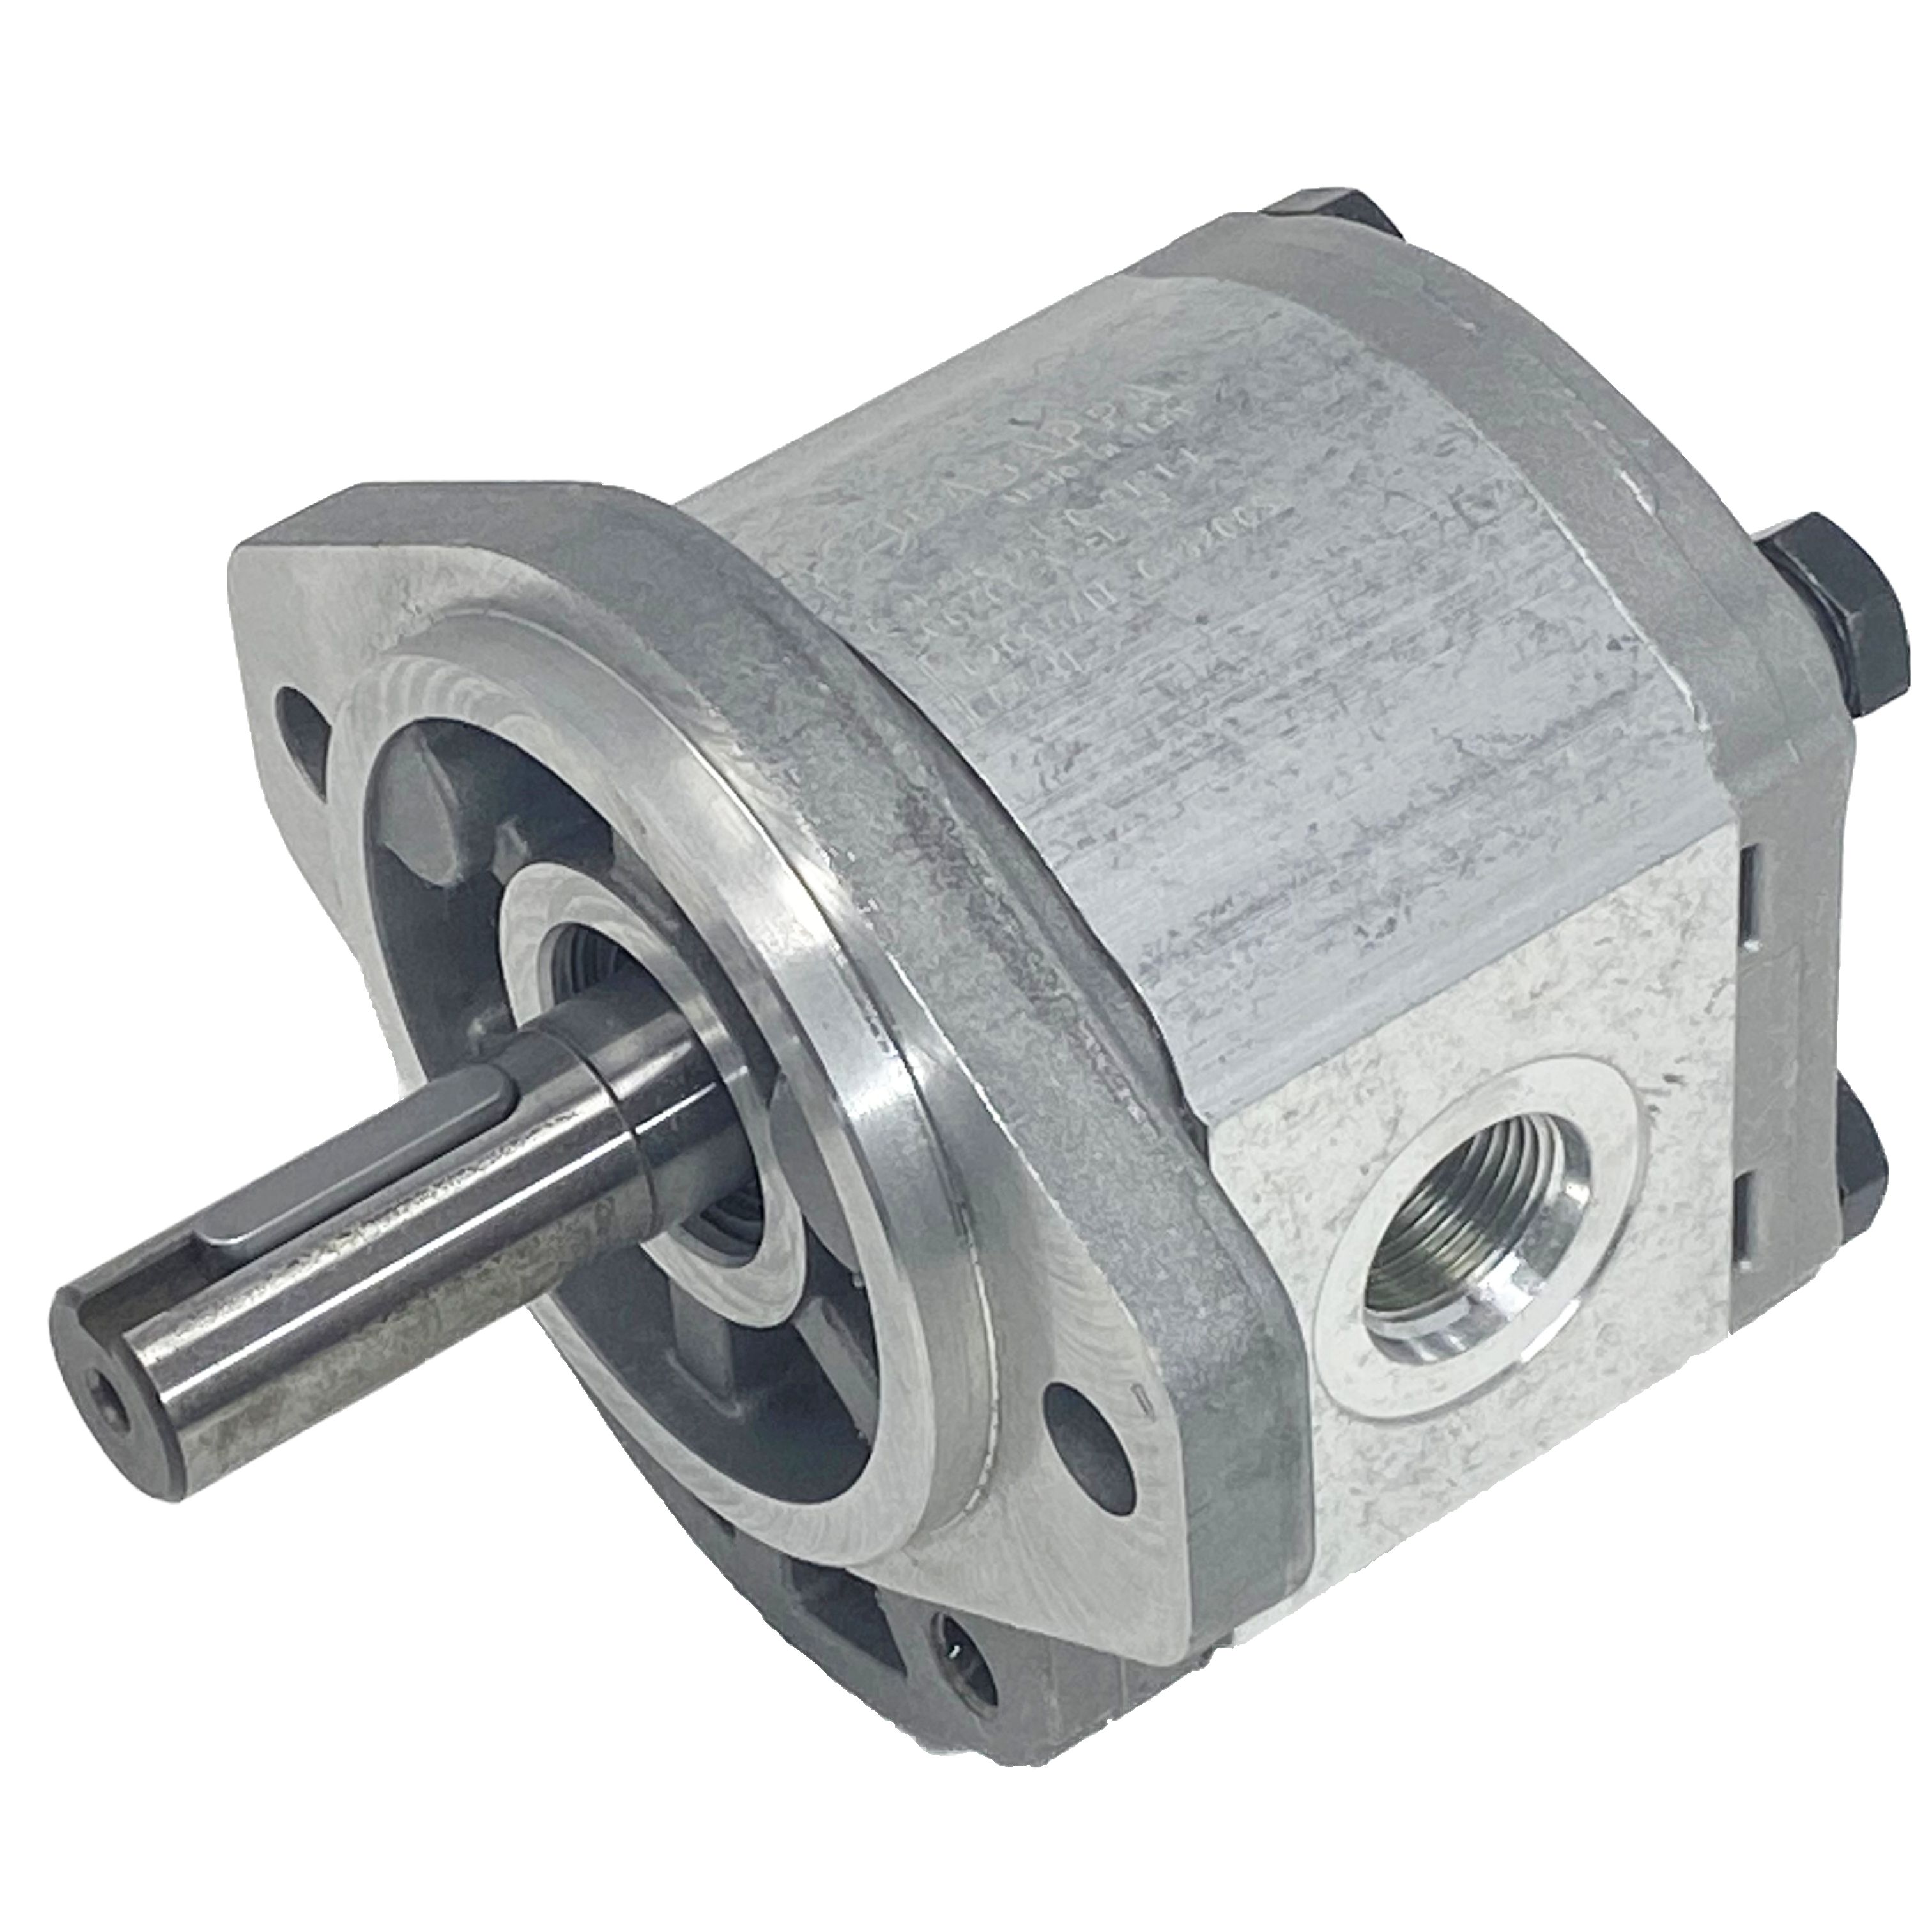 PLM20.9R0-49S1-LOC/OC-N-EL : Casappa Polaris Gear Motor, 9.17cc, 3625psi Rated, 3500RPM, Reversible Rear External Drain, 3/4" Bore x 3/16" Key Shaft, SAE A 2-Bolt Flange, 0.625 (5/8") #10 SAE Inlet, 0.625 (5/8") #10 SAE Outlet, Aluminum Body & Flange